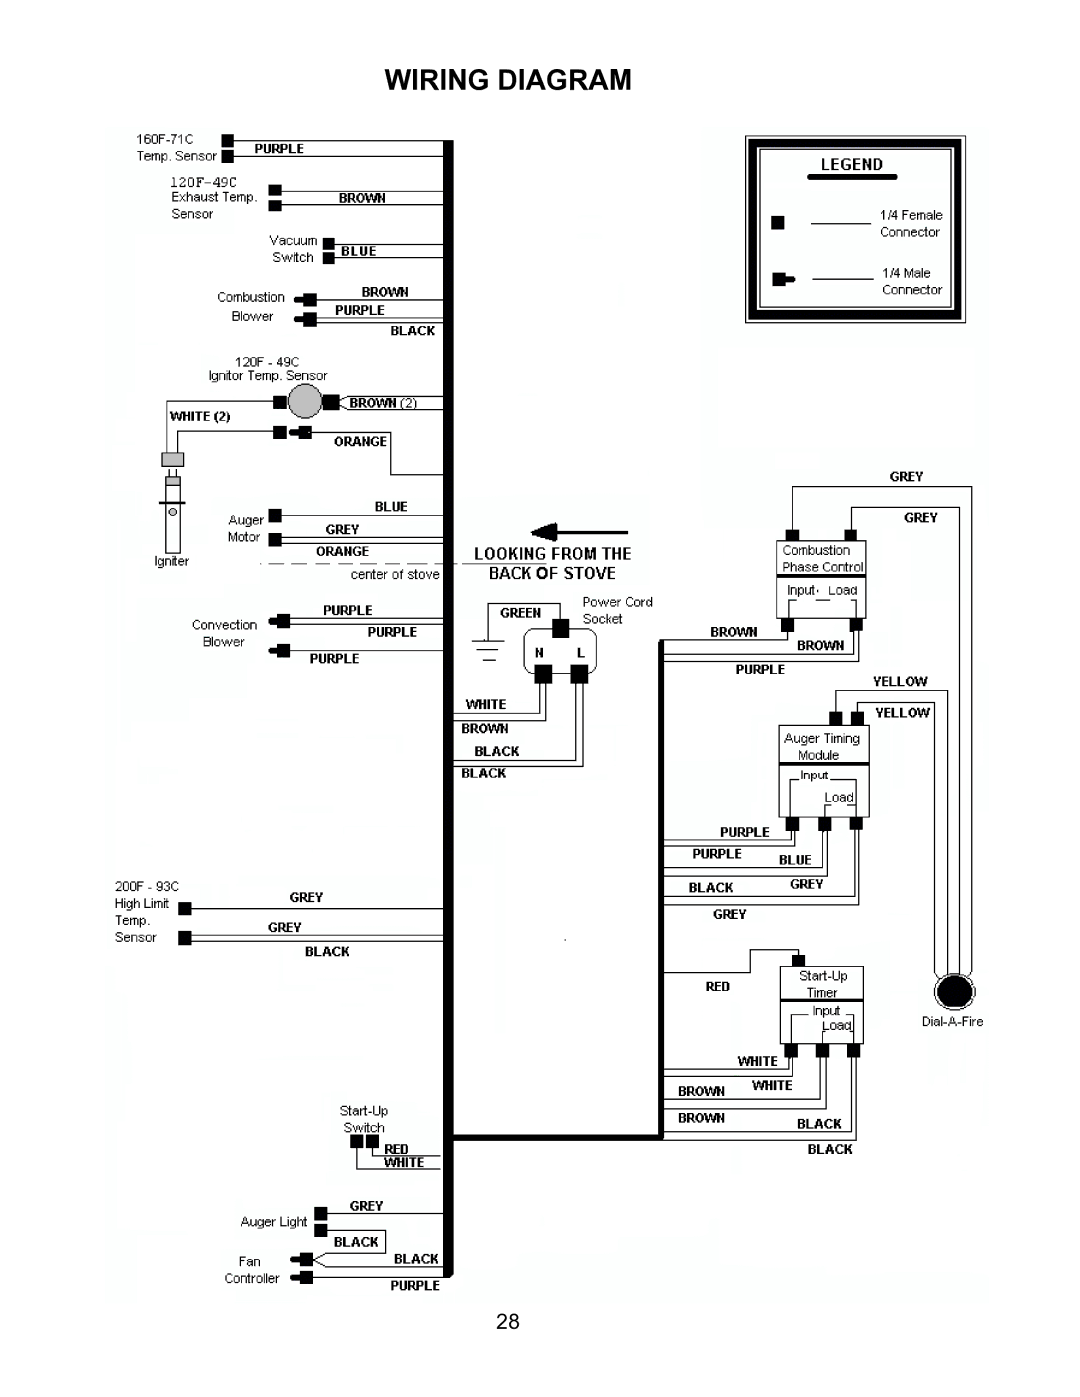 Enviro EF-IV I technical manual Wiring Diagram 